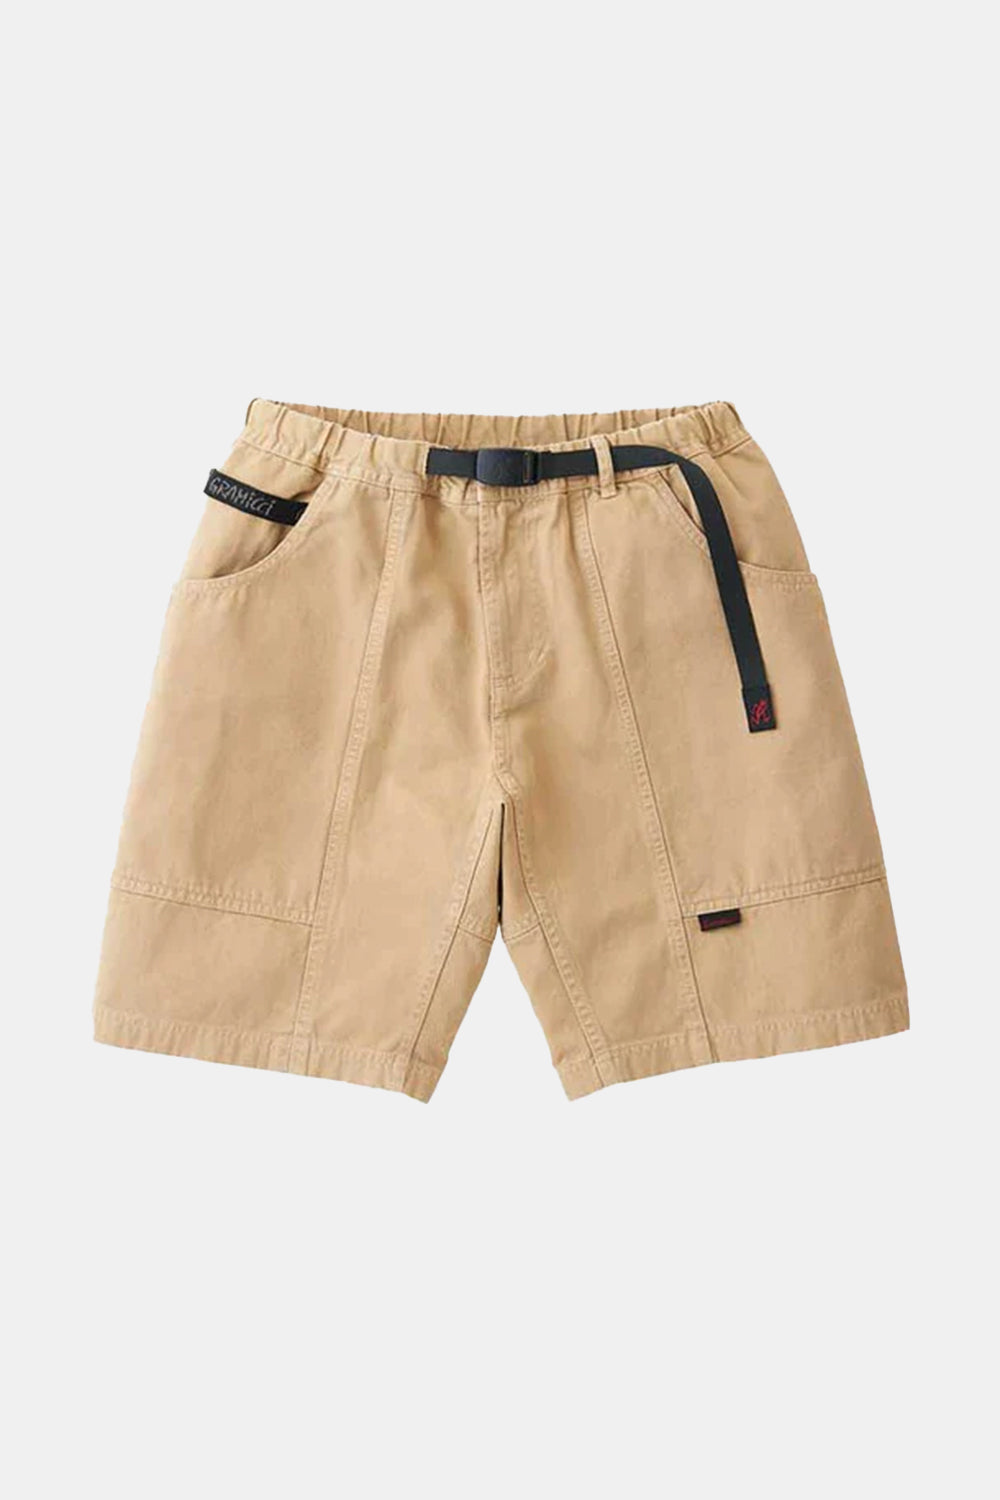 Gramicci Gadget Shorts (Chino) | Number Six